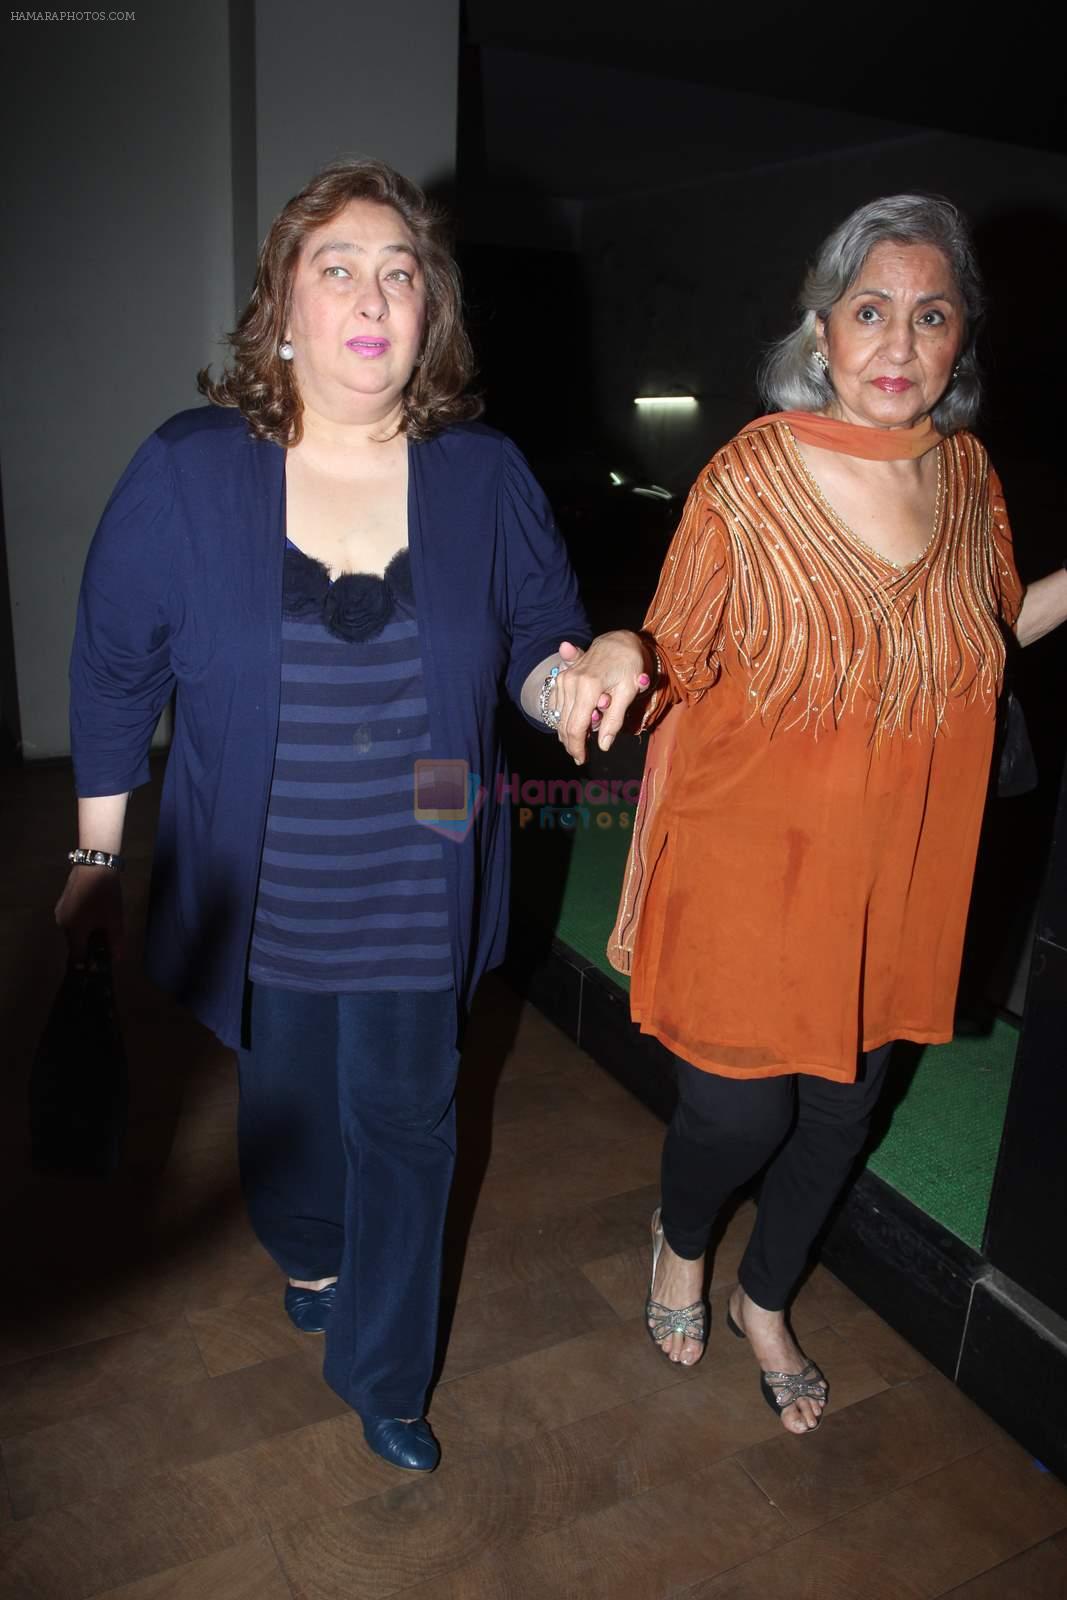 Reema Jain at Honey Irani screening of Dil Dhadakne Do in Mumbai on 31st May 2015